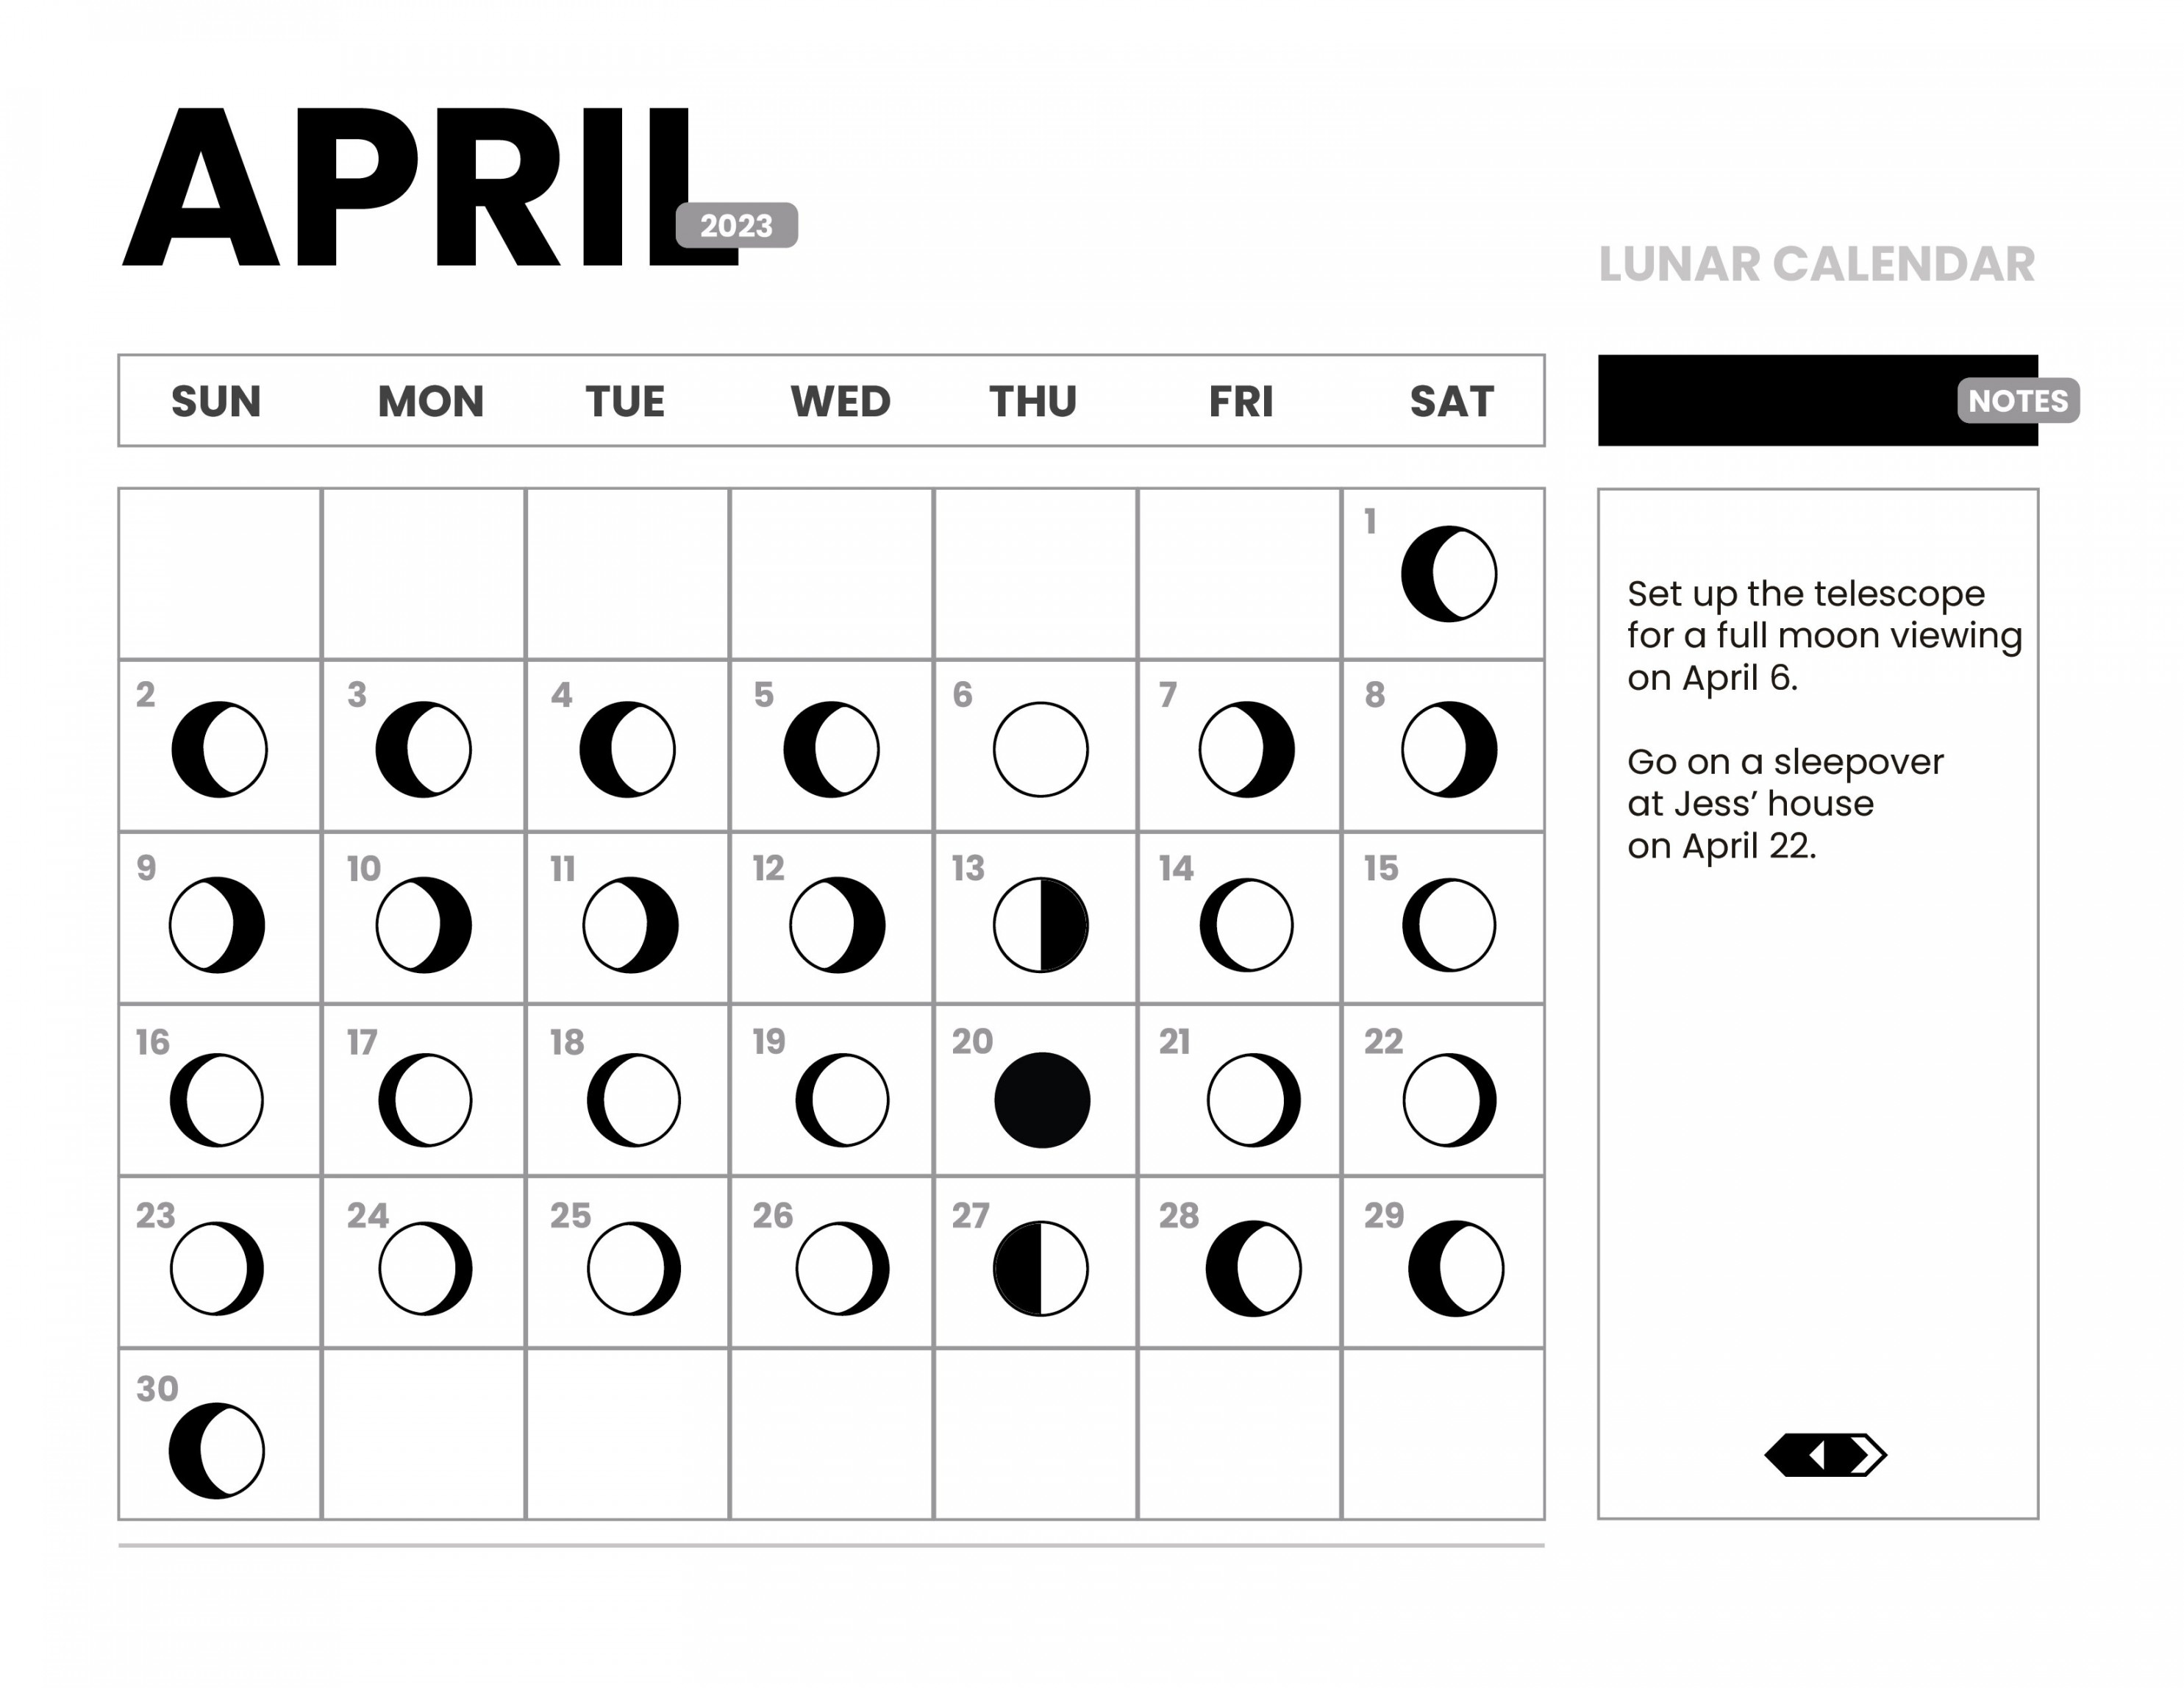 Lunar Calendar April  - Download in Word, Google Docs